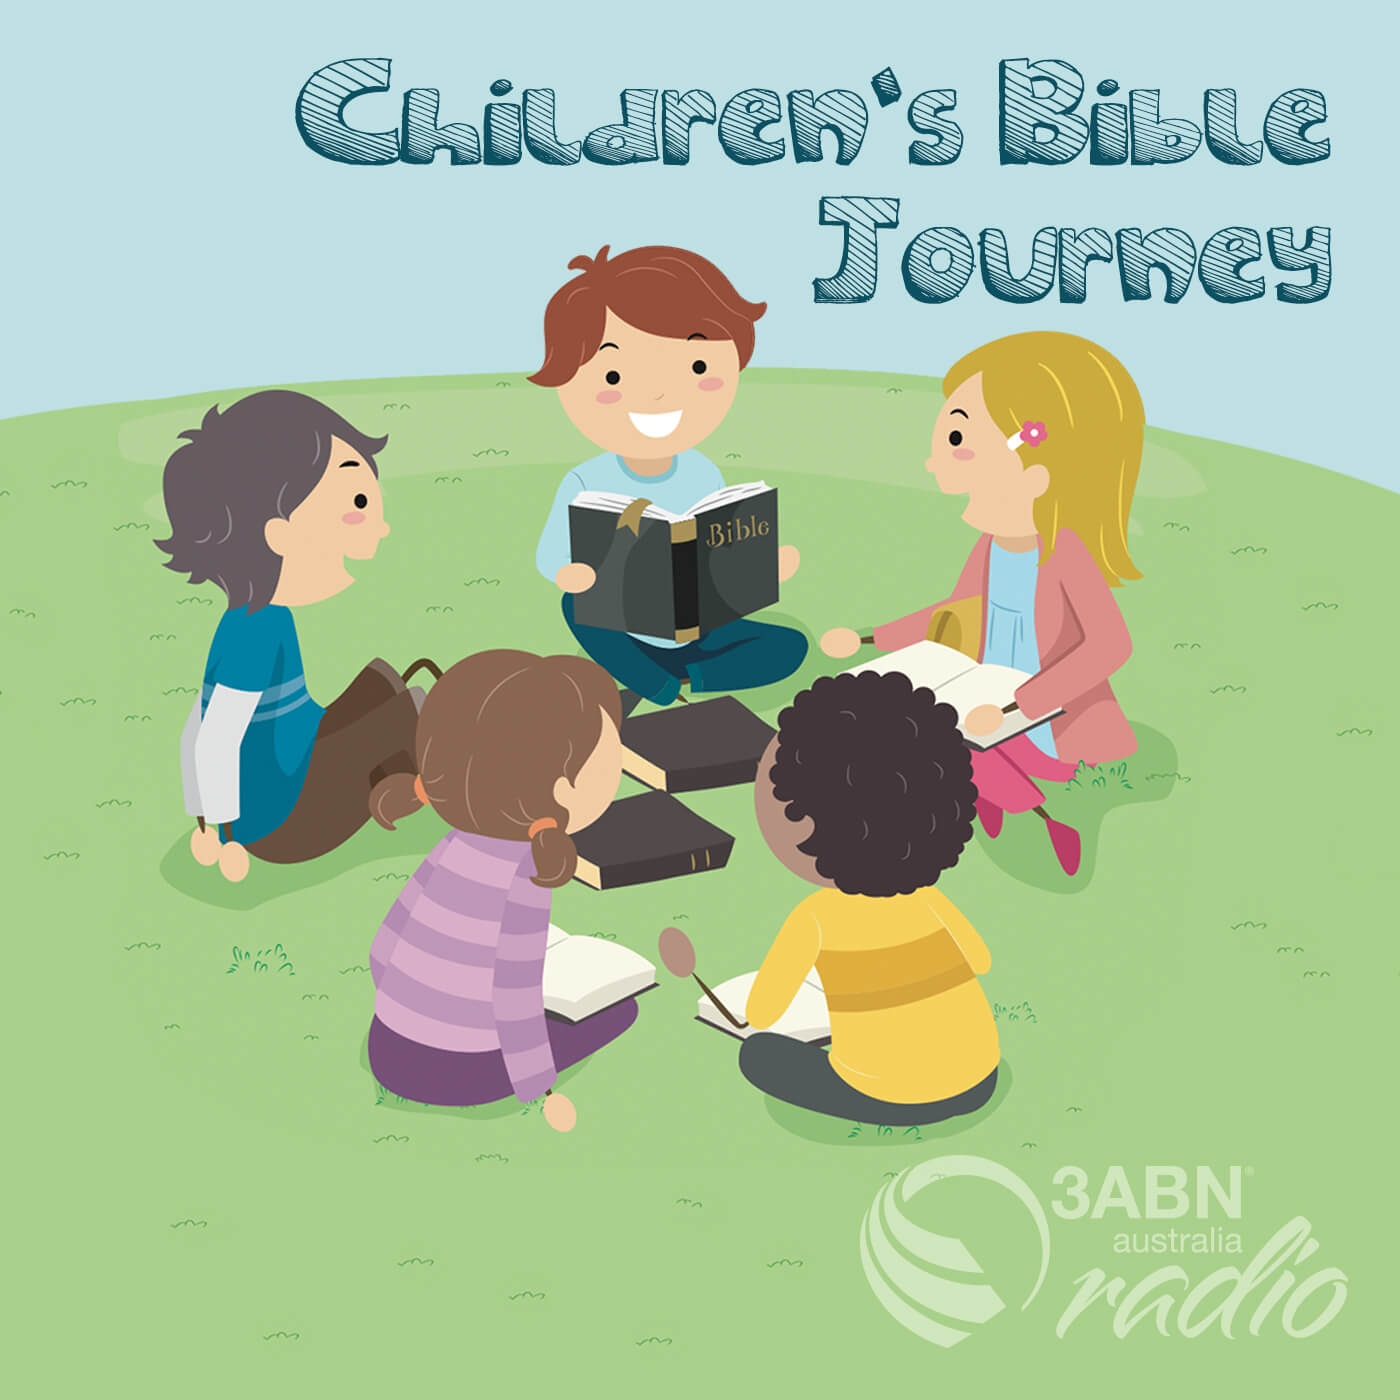 Children's Bible Journey - 2181